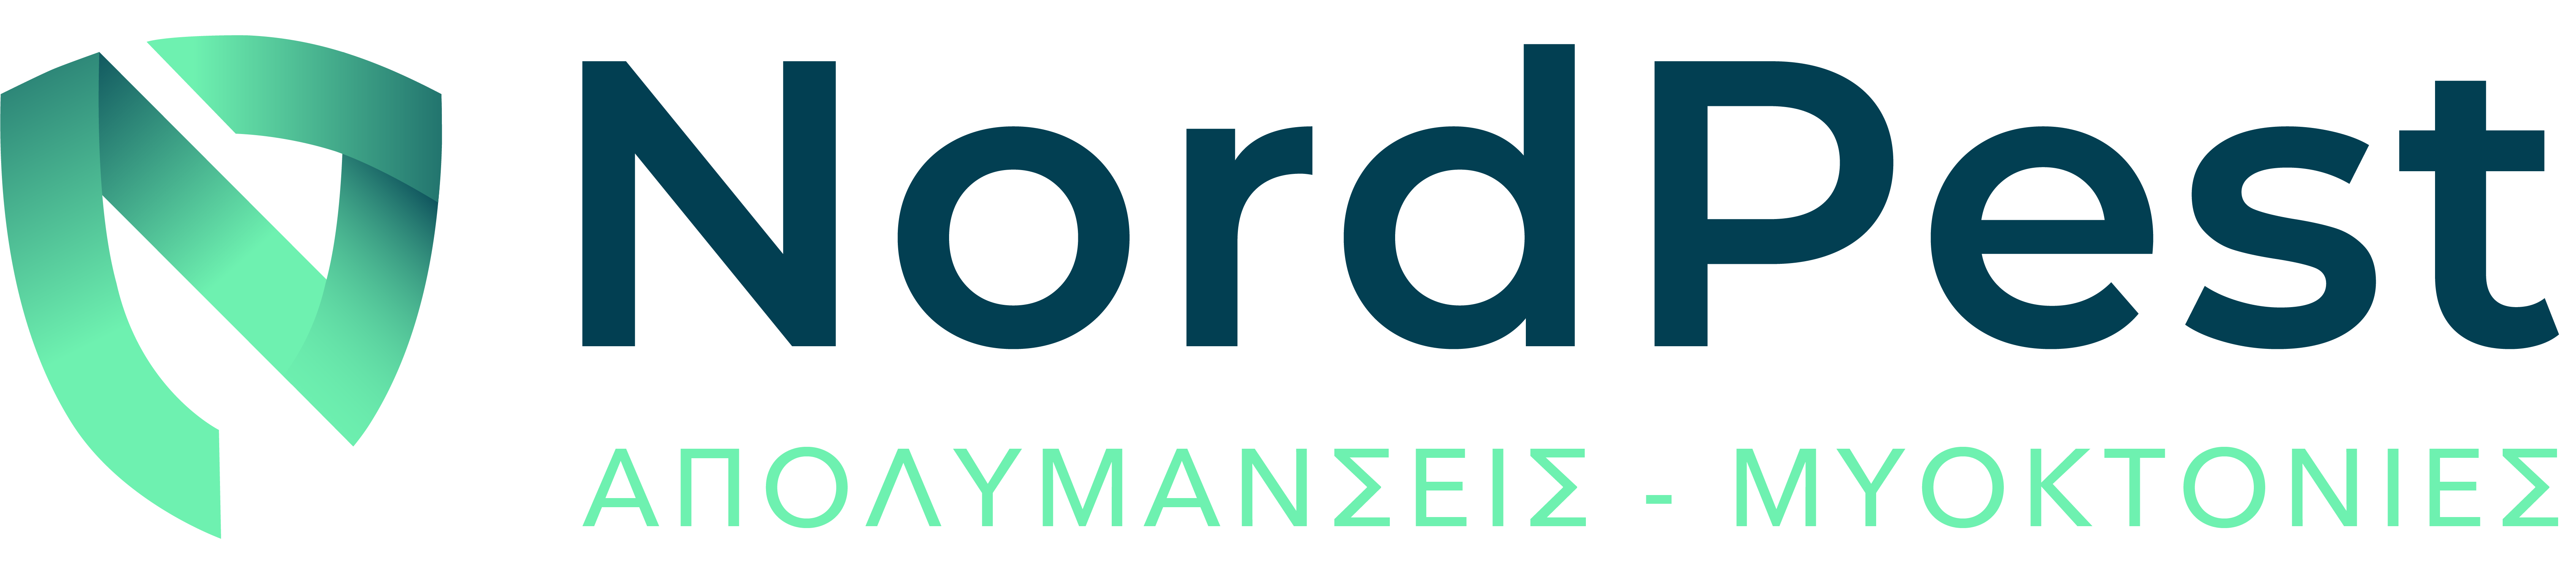 nordshield-logo-big